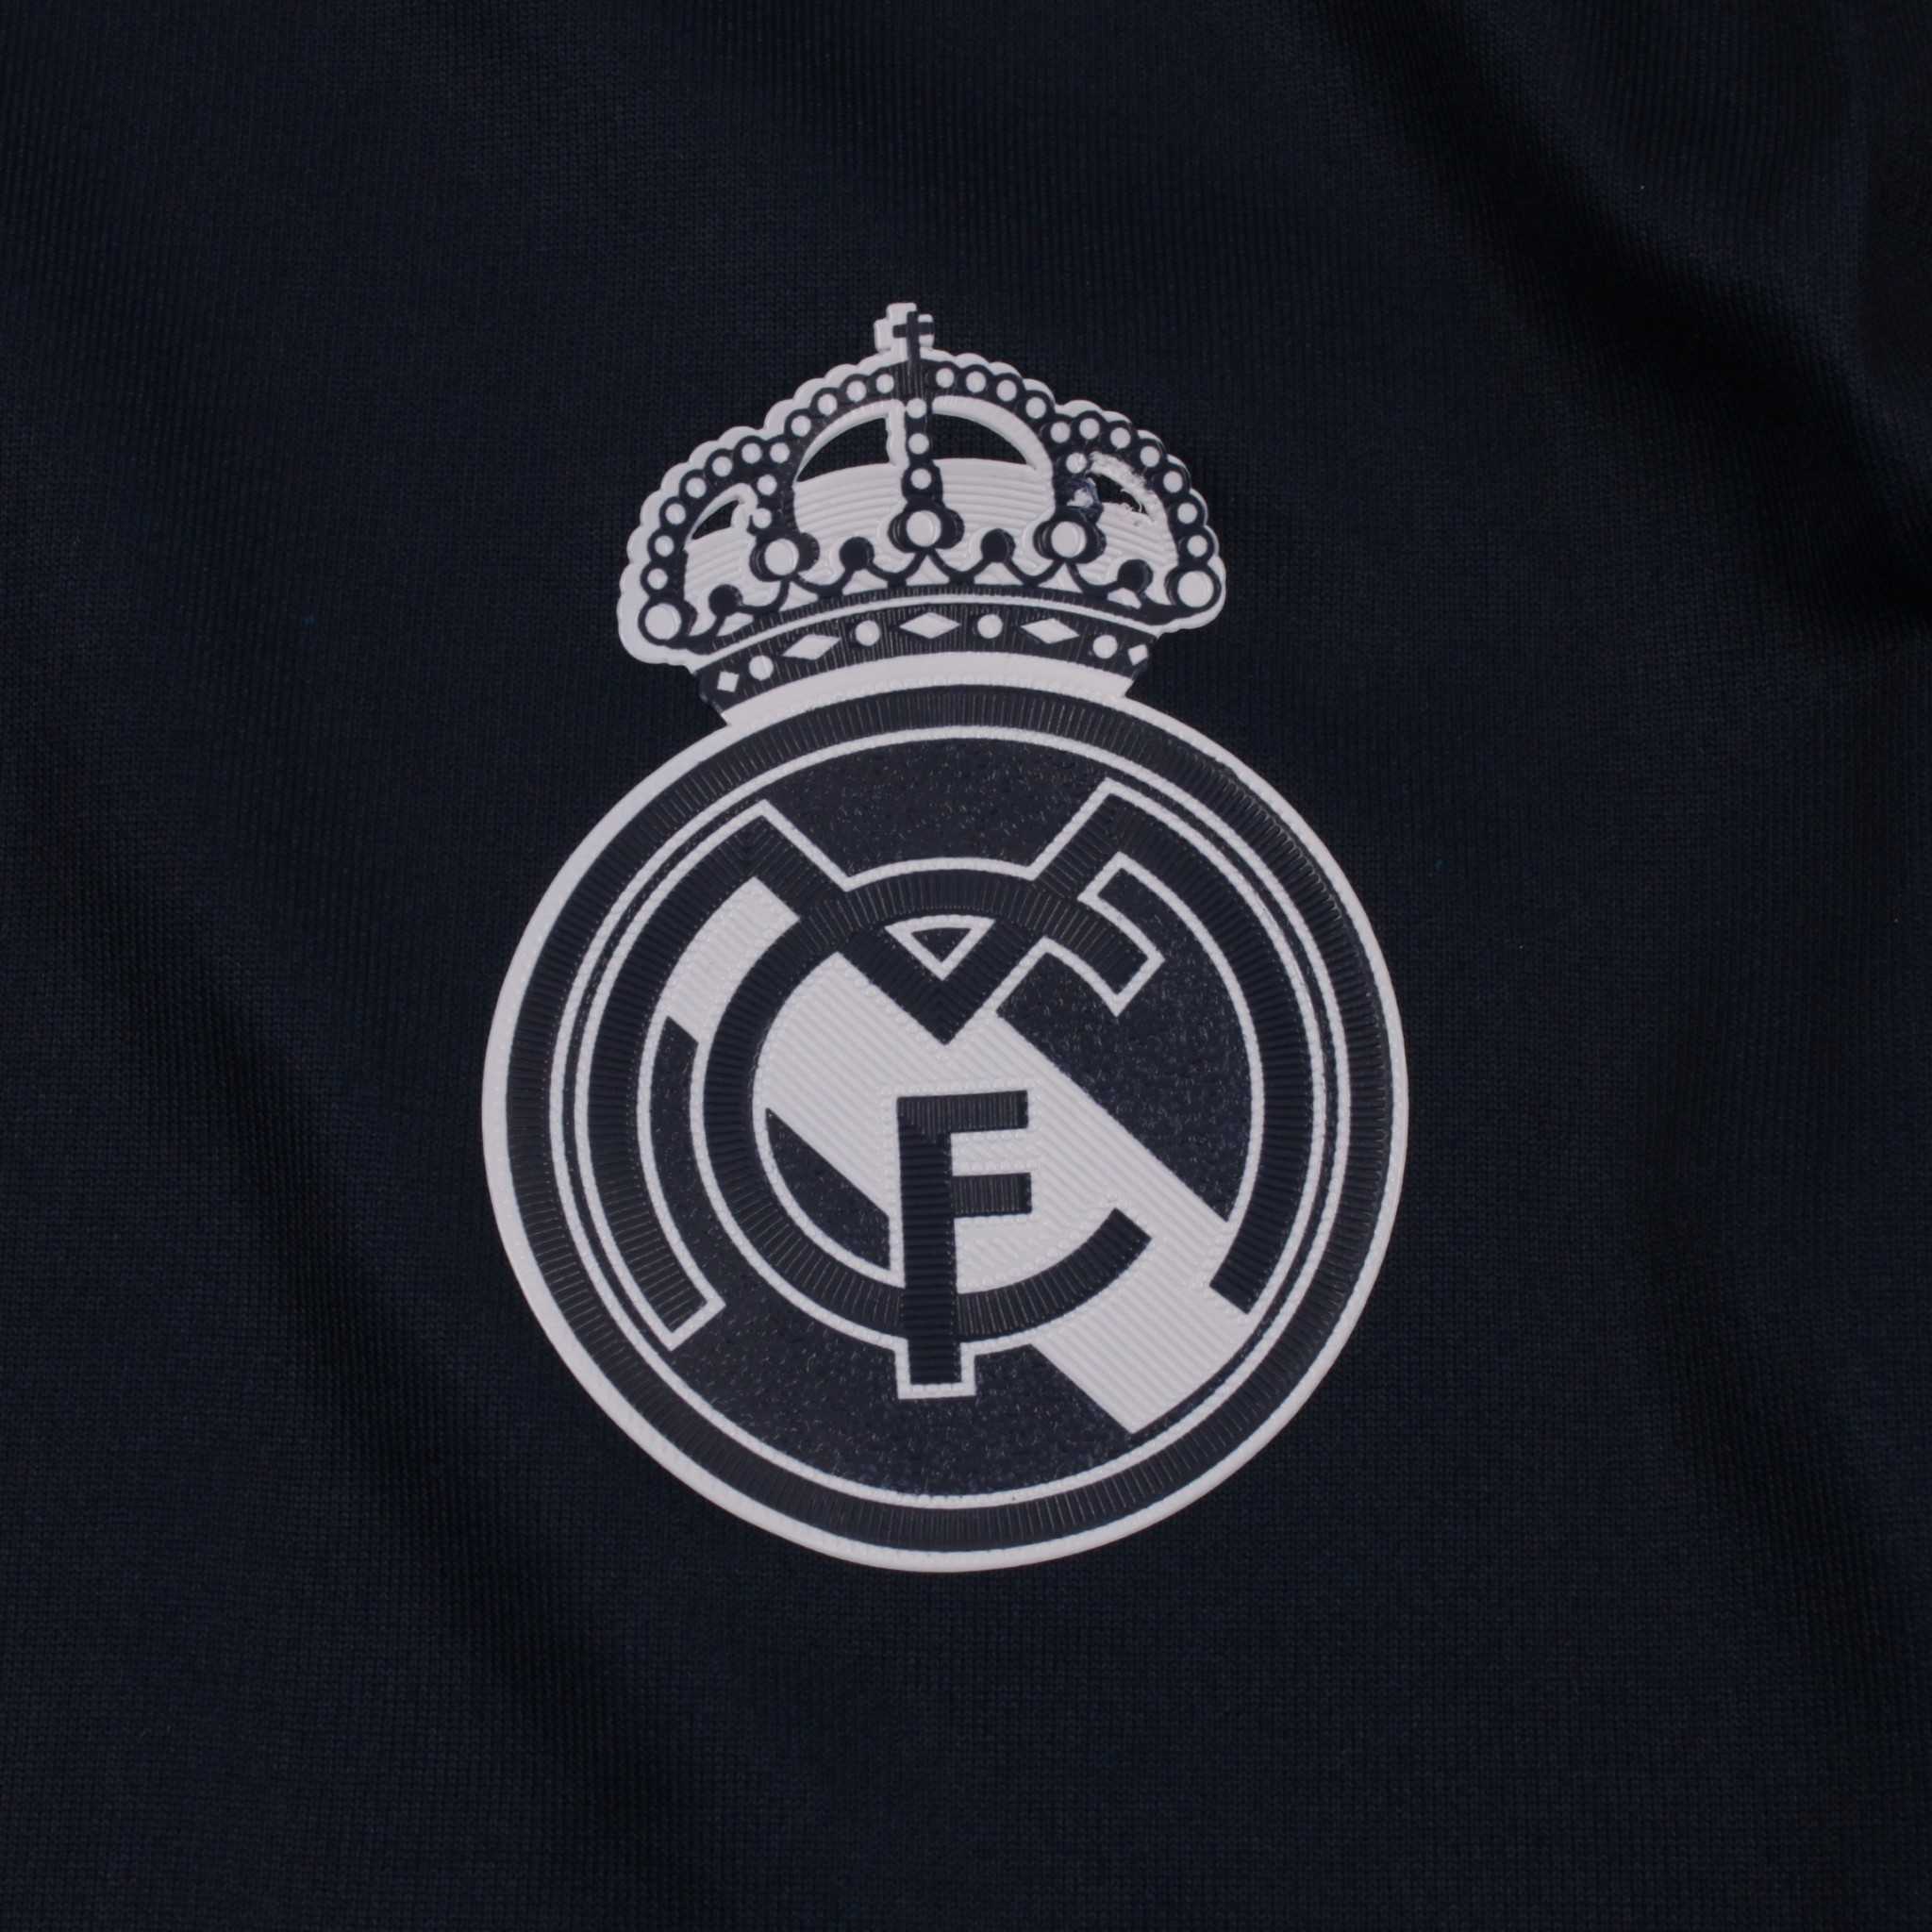 Real Madrid Logo 2018 Wallpaper Full HD Pics Of Laptop